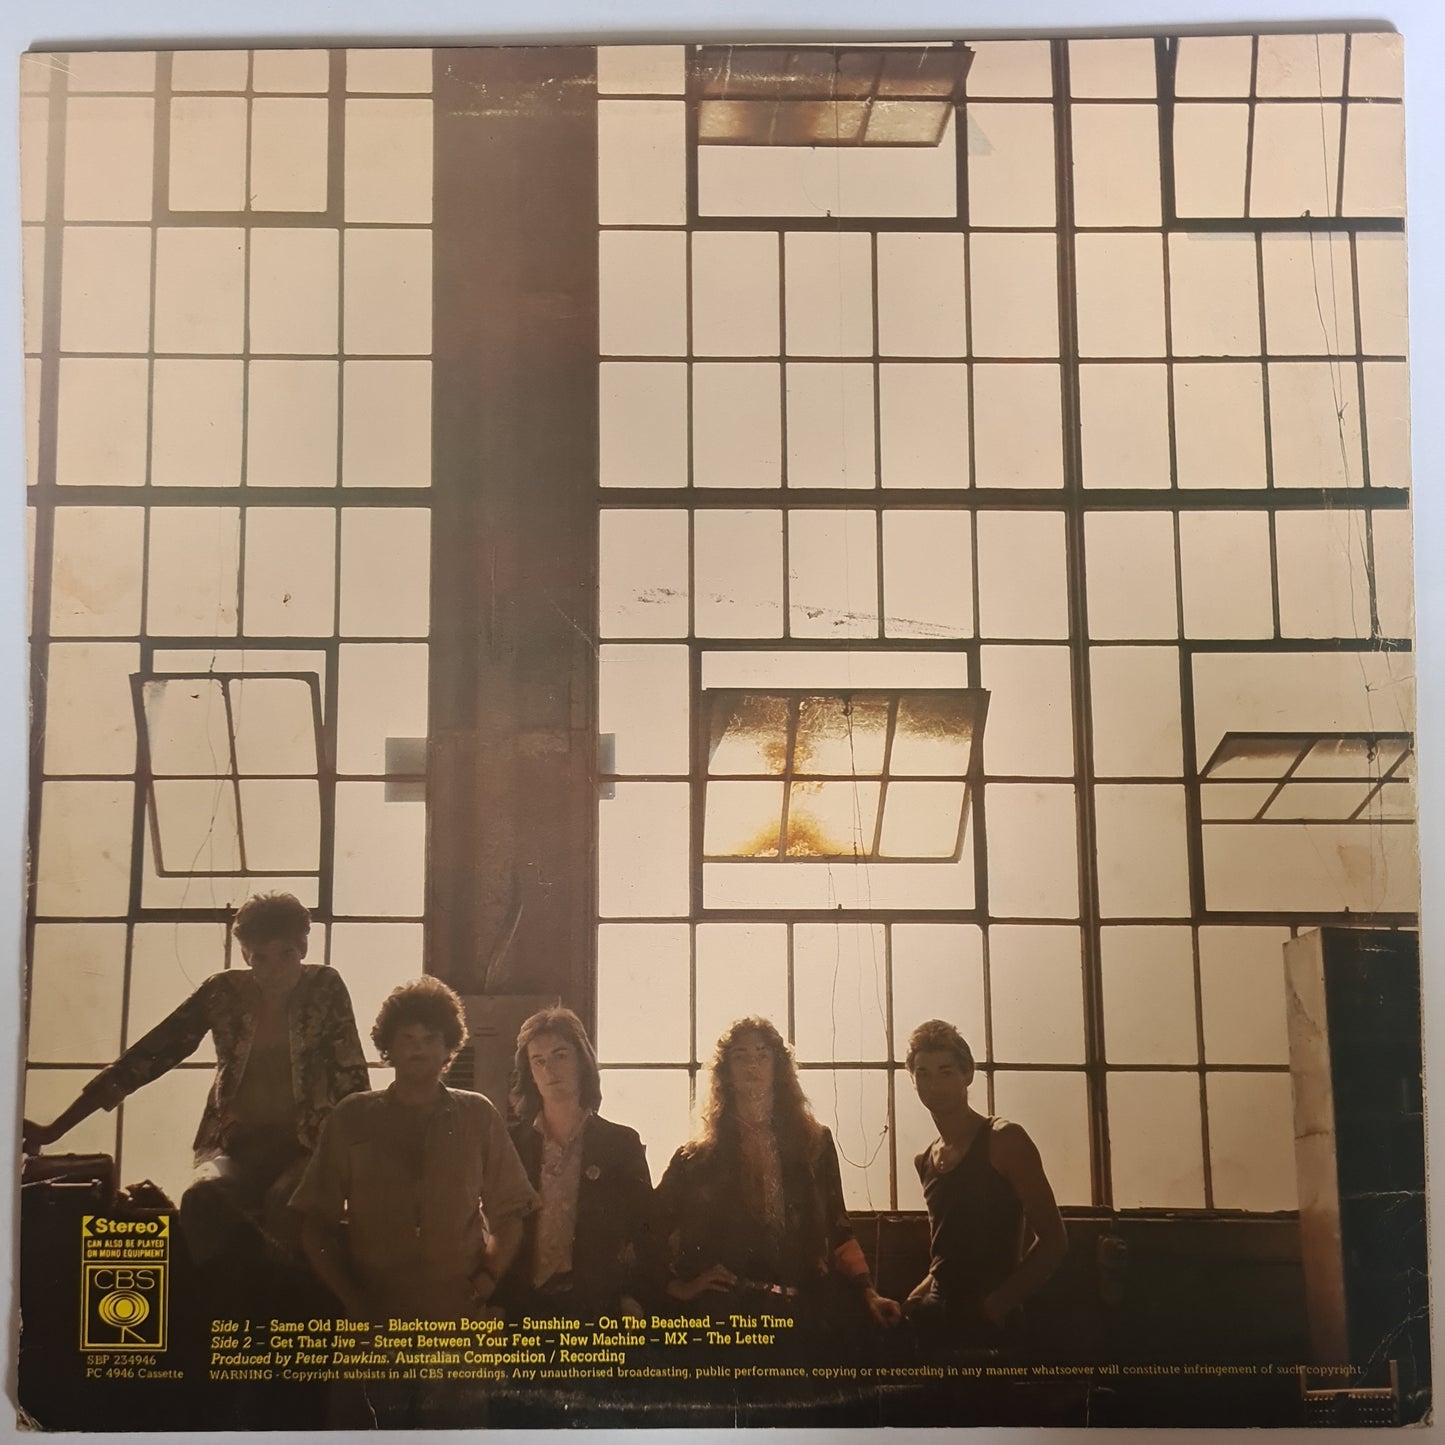 Dragon  – Sunshine - 1977 - Vinyl Record